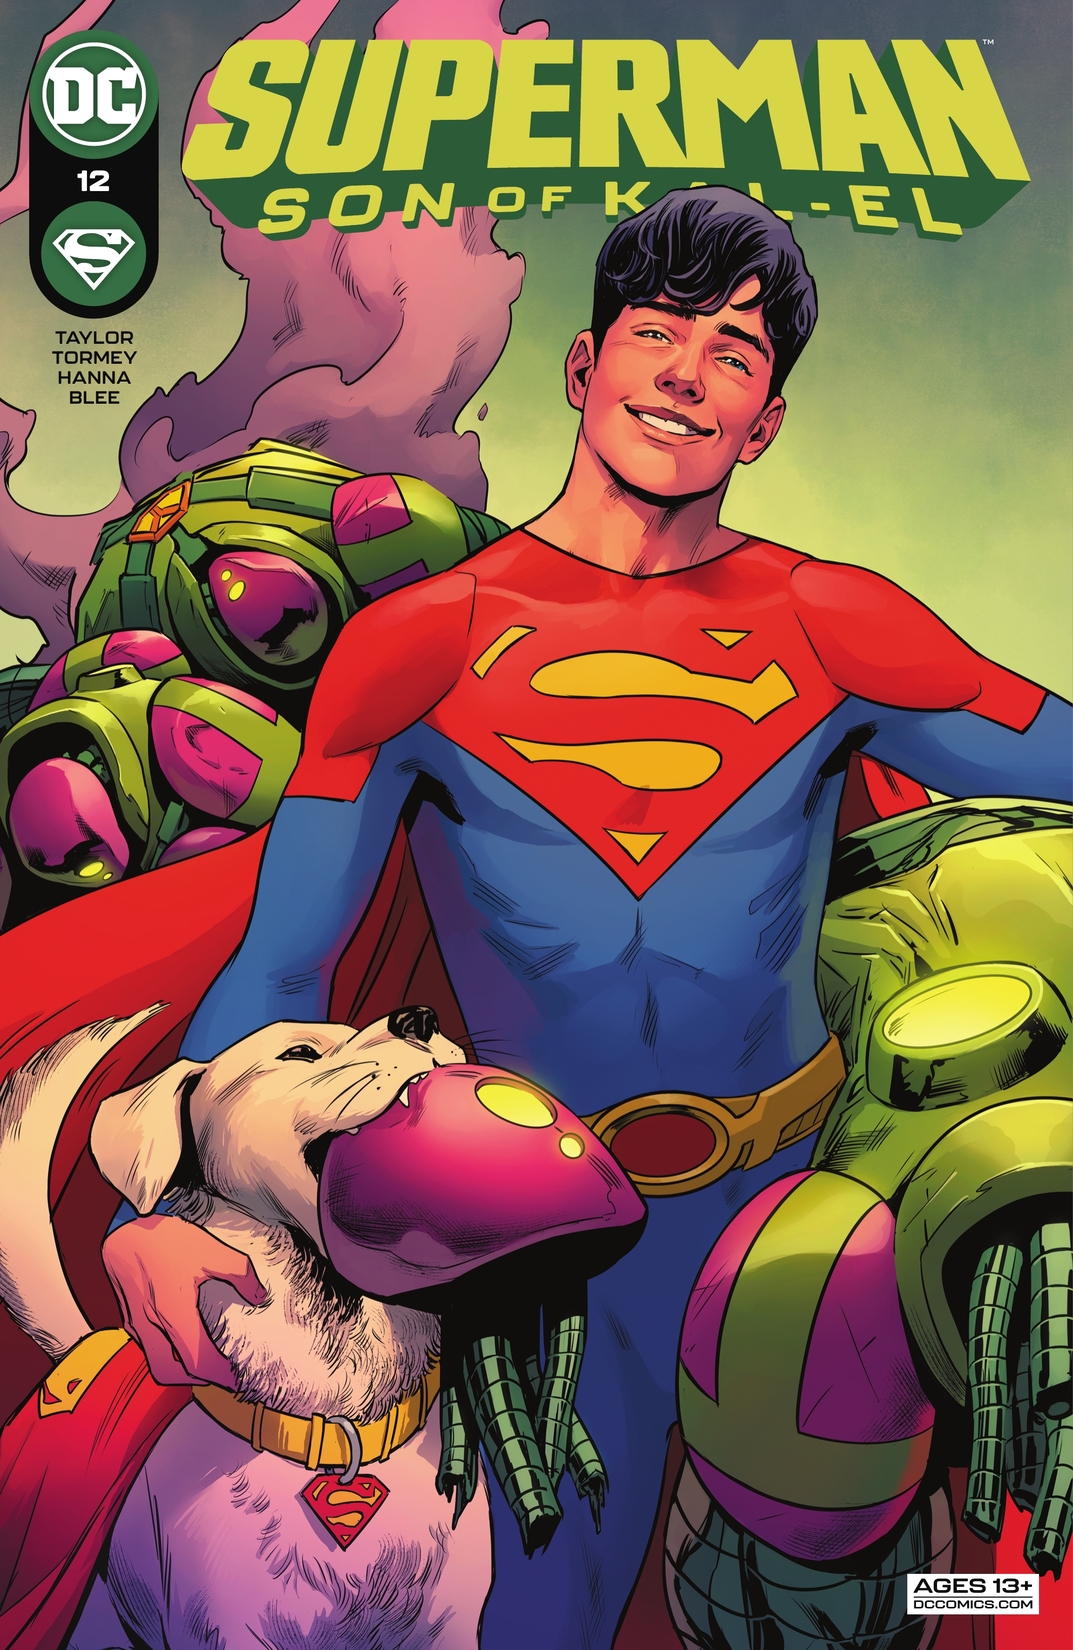 Superman: Son of Kal-El #12 preview images